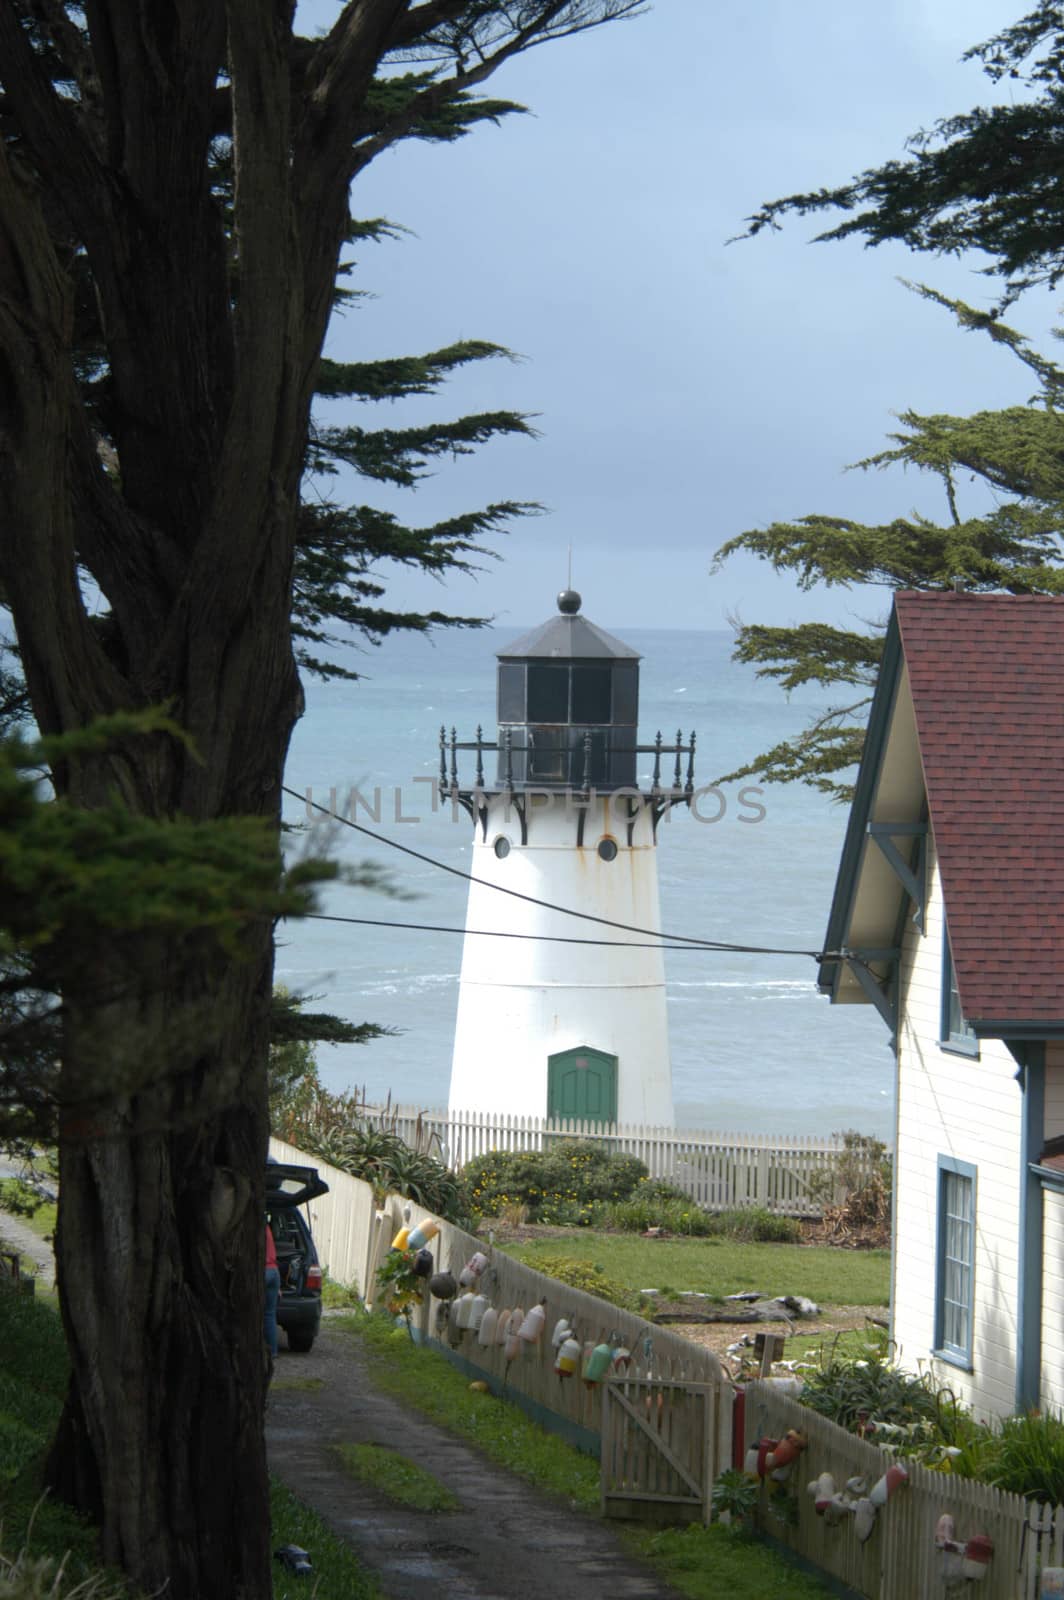 Pt Montara Lighthouse Hostel by cestes001